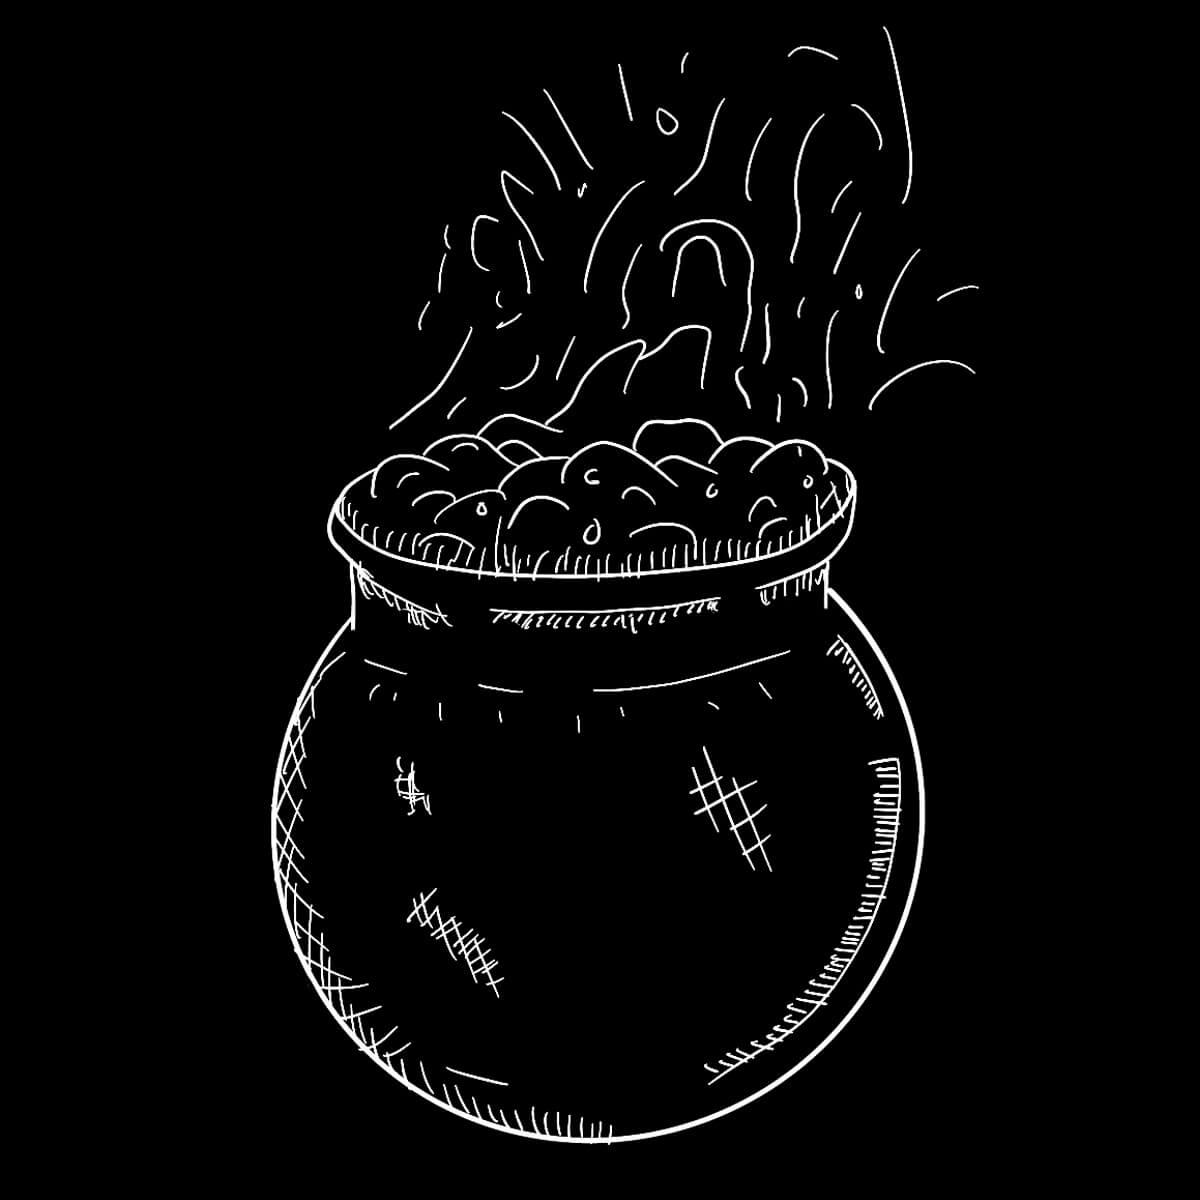 Web-Design-and-development-cauldron-smoking